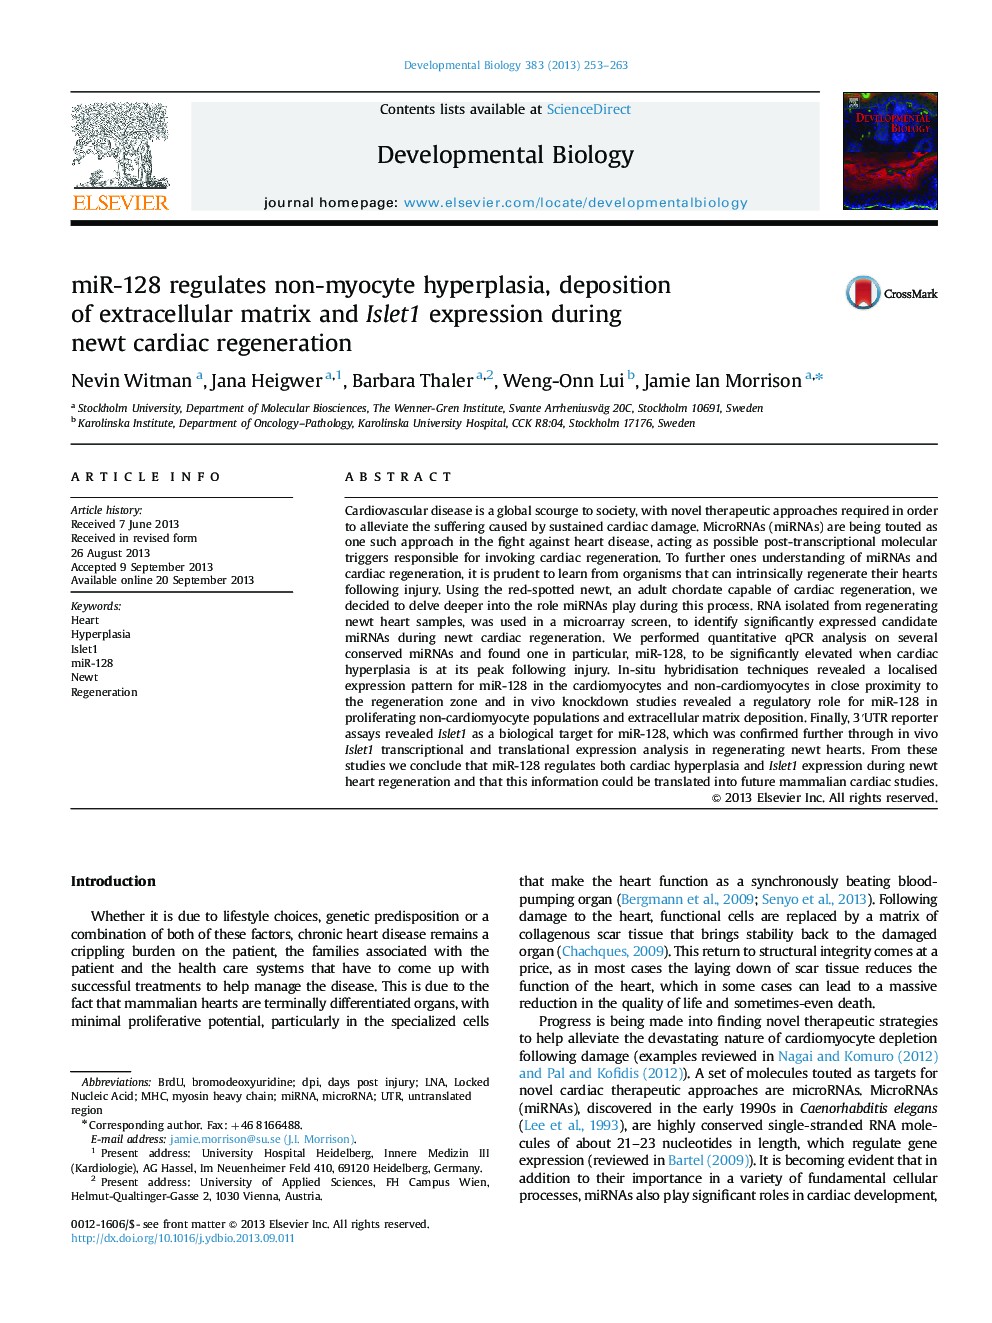 miR-128 regulates non-myocyte hyperplasia, deposition of extracellular matrix and Islet1 expression during newt cardiac regeneration